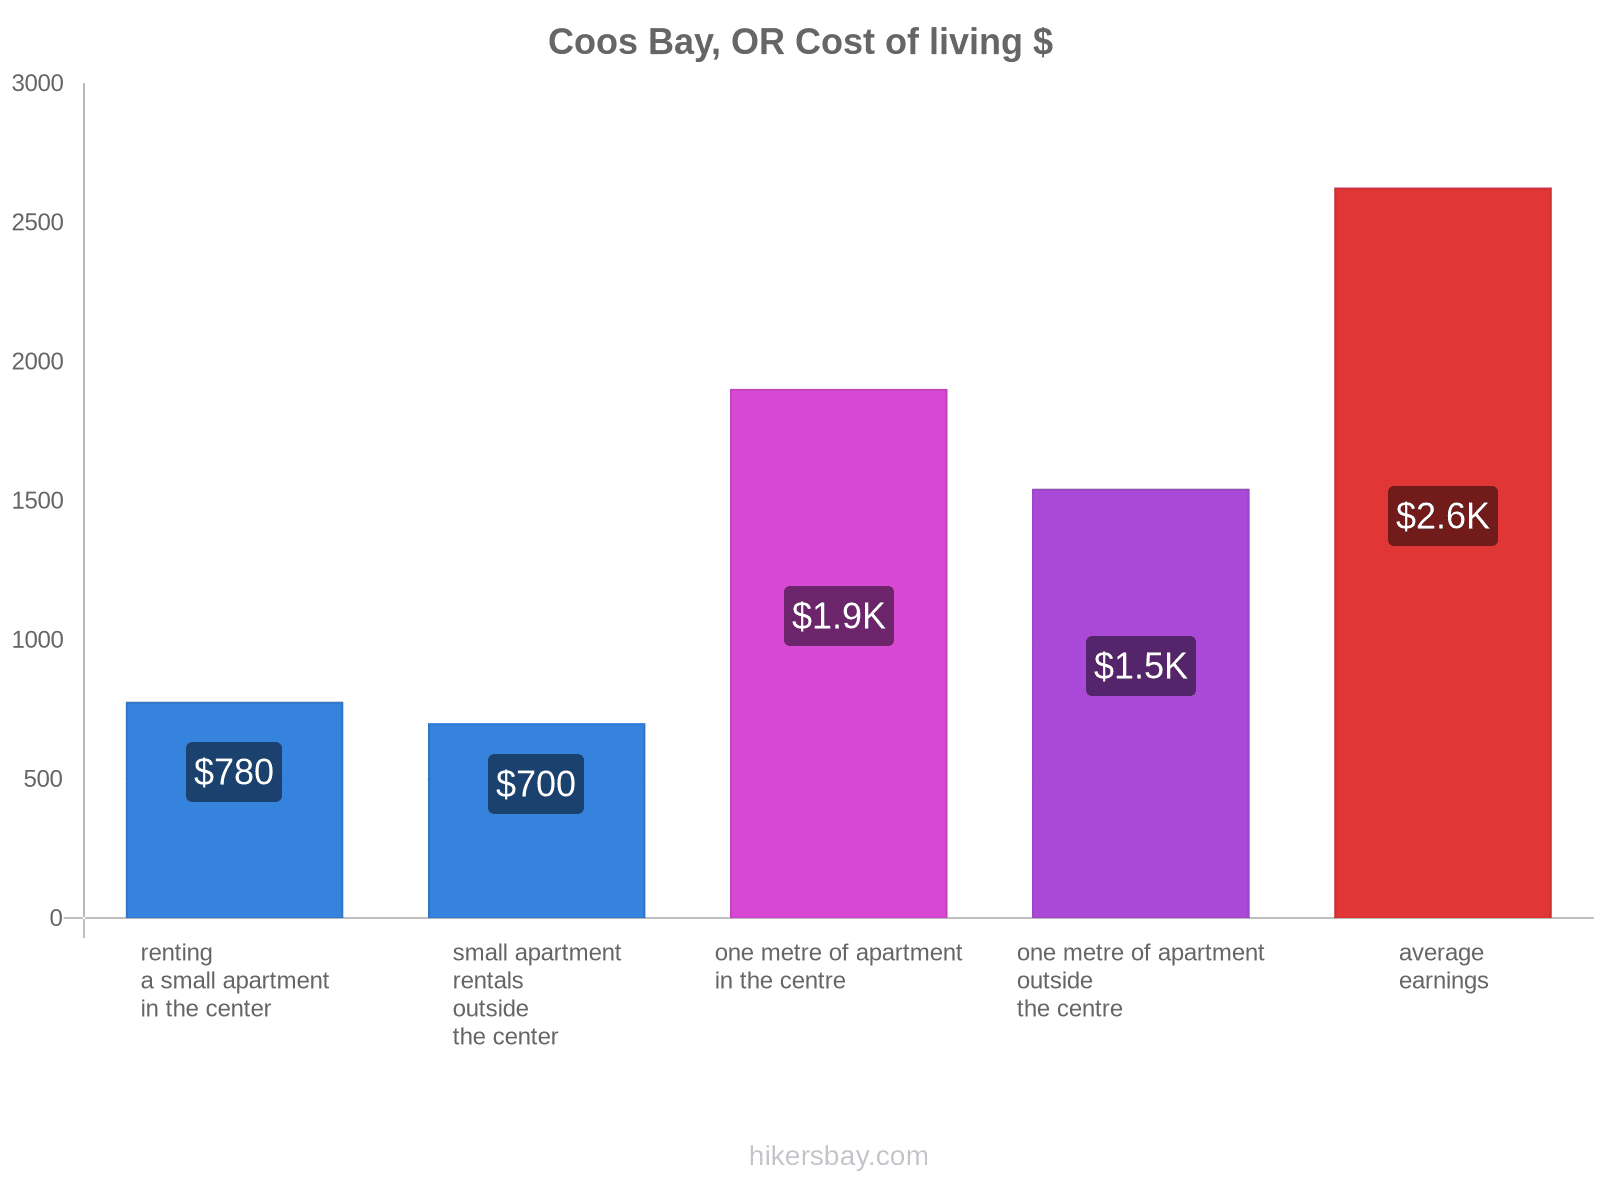 Coos Bay, OR cost of living hikersbay.com